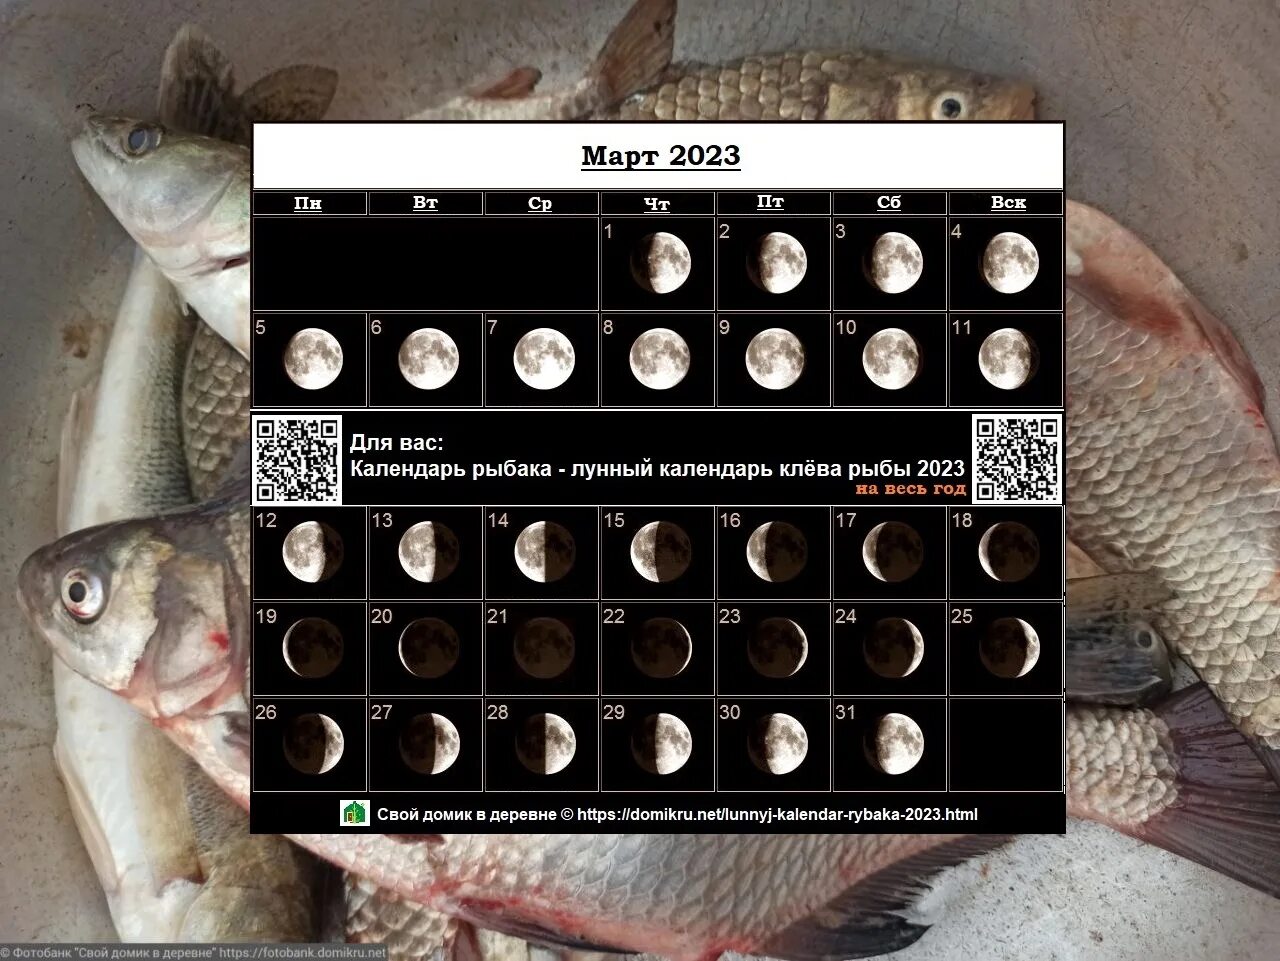 Рыболовный лунный календарь на март. Лунный календарь рыбака. Календарь рыбака 2023. Лунный календарь рыбака 2023. Лунный календарь рыбака на 2023 год.